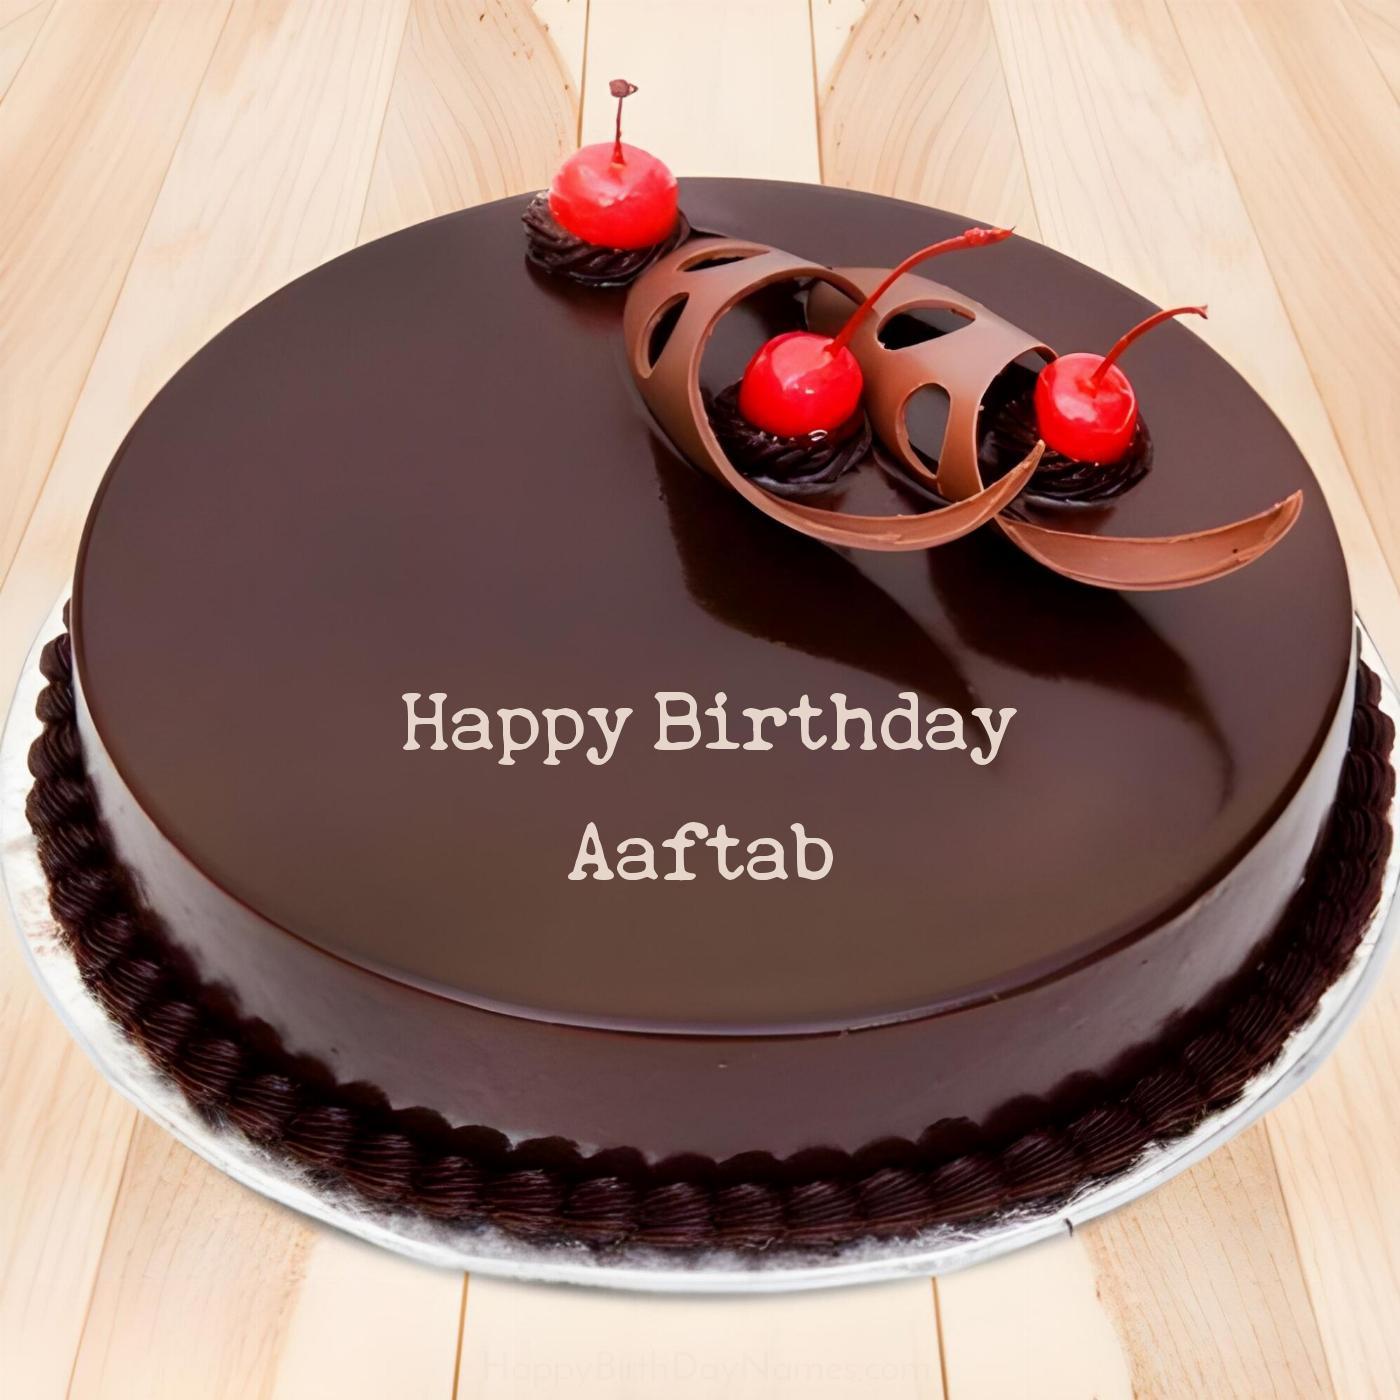 Happy Birthday Aaftab Chocolate Cherry Cake